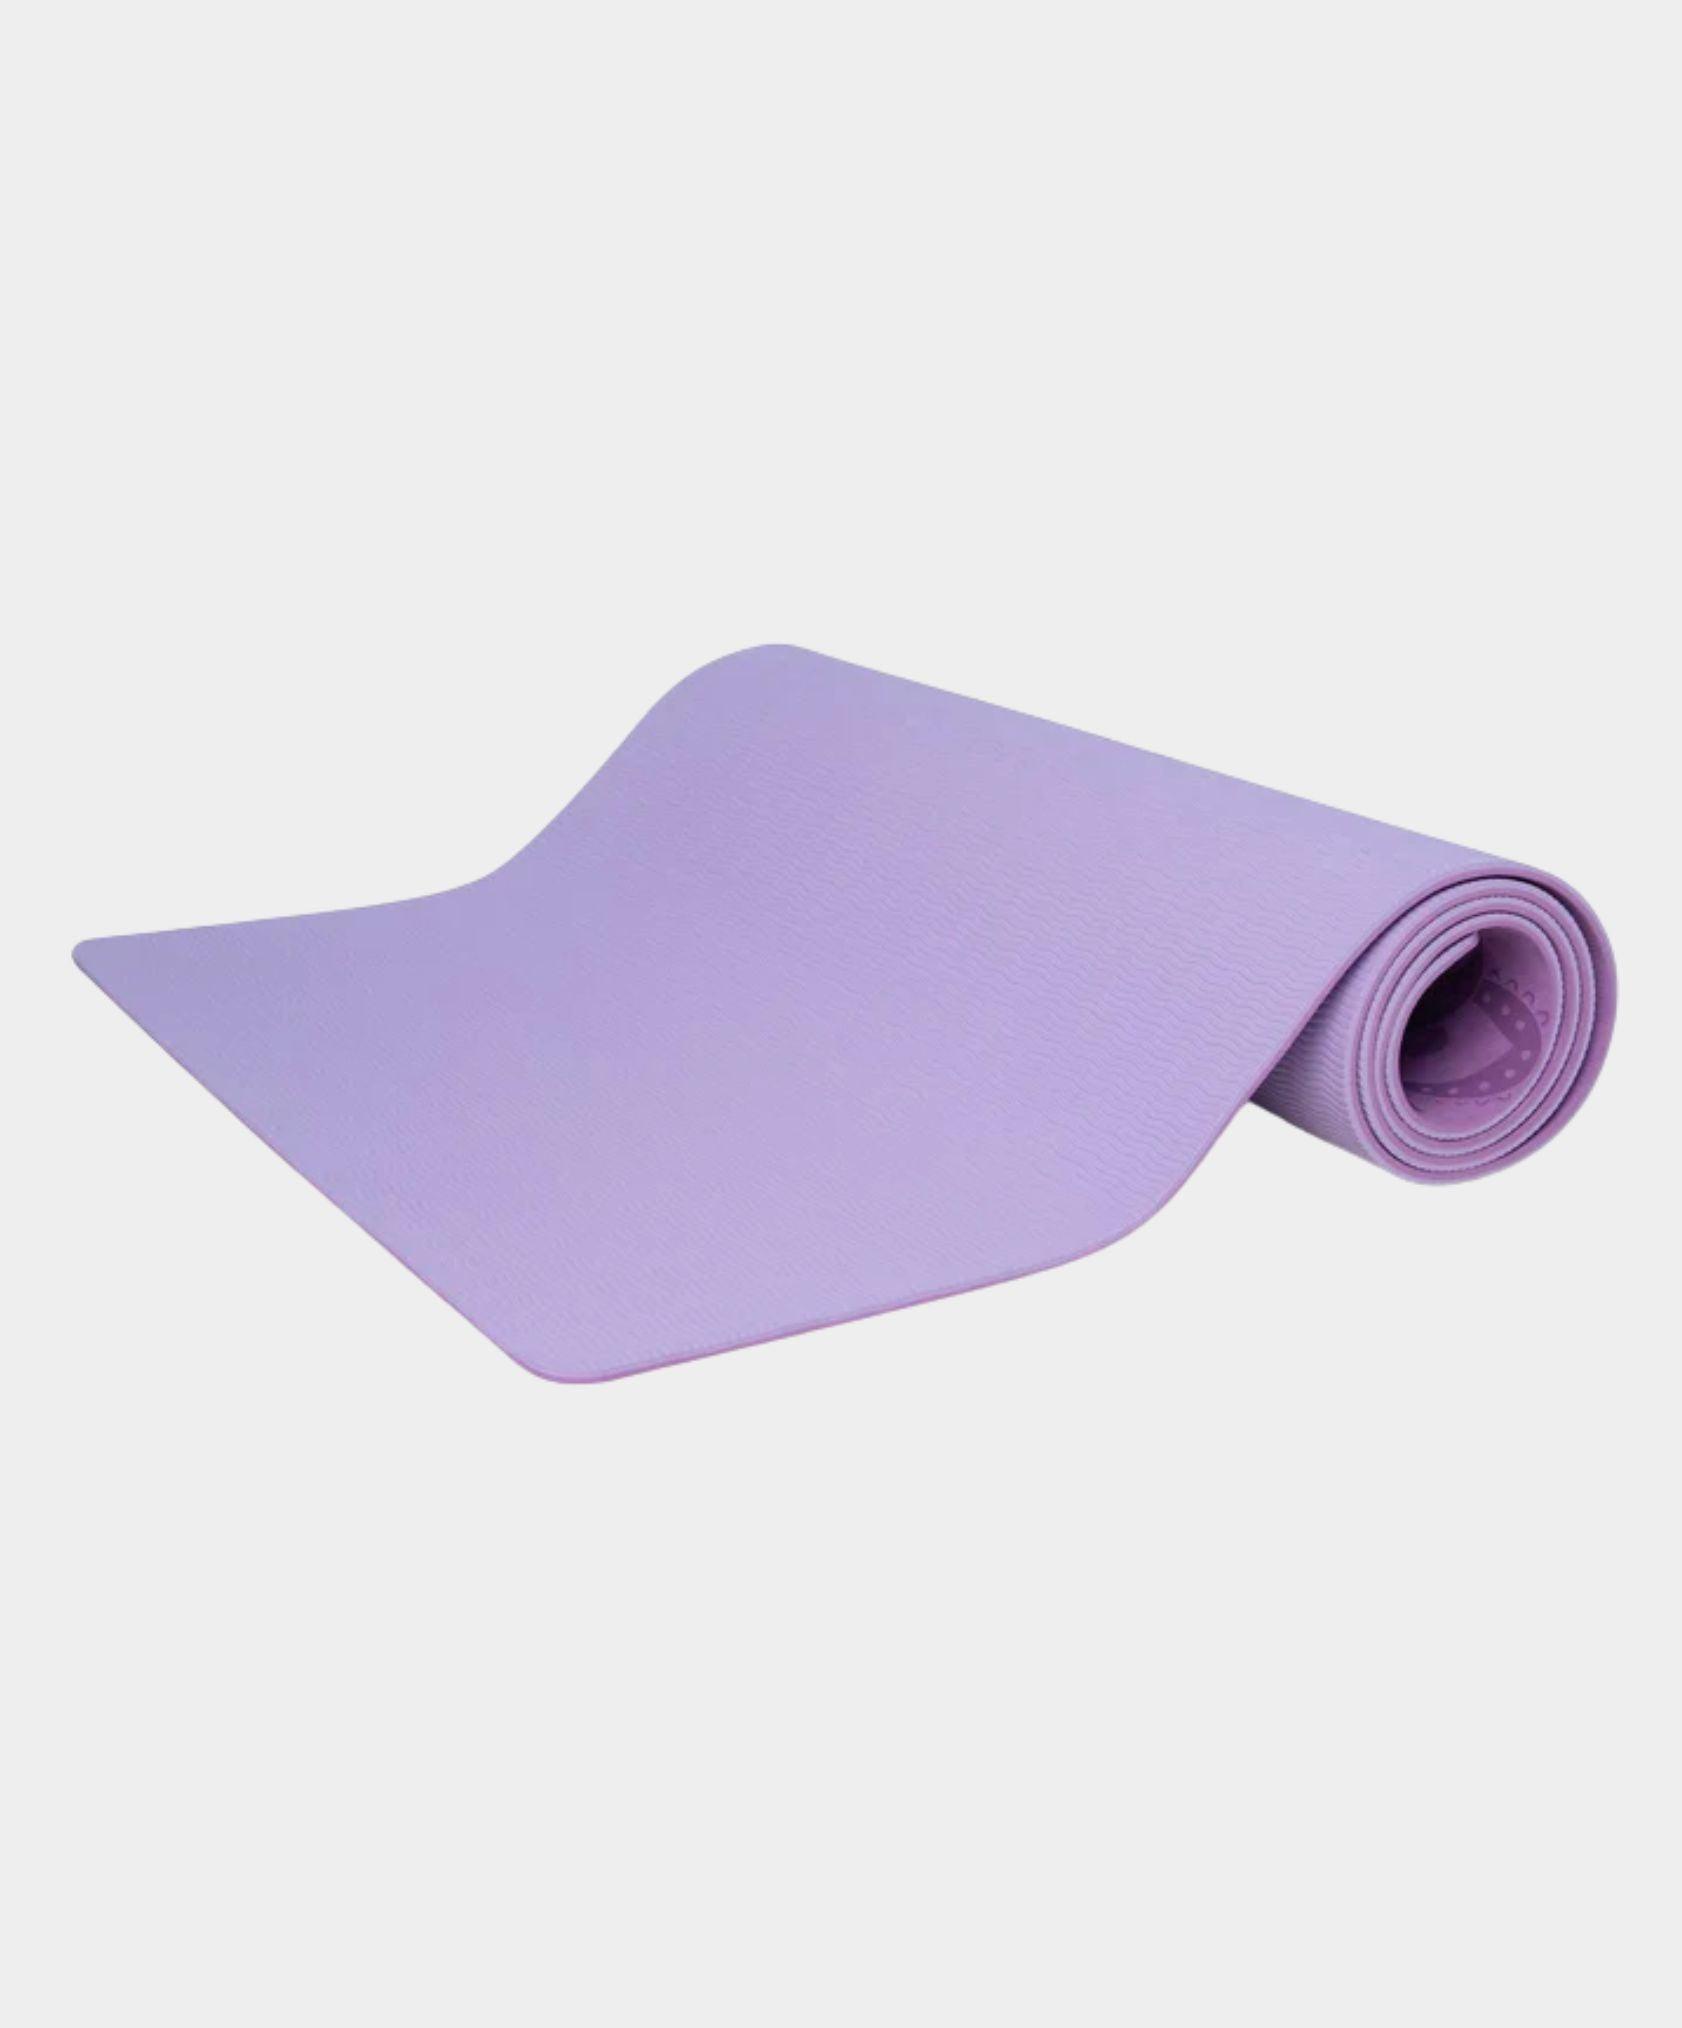 YDL Flow Yoga Mat - Best For Beginner Practices - Yoga Design Lab 